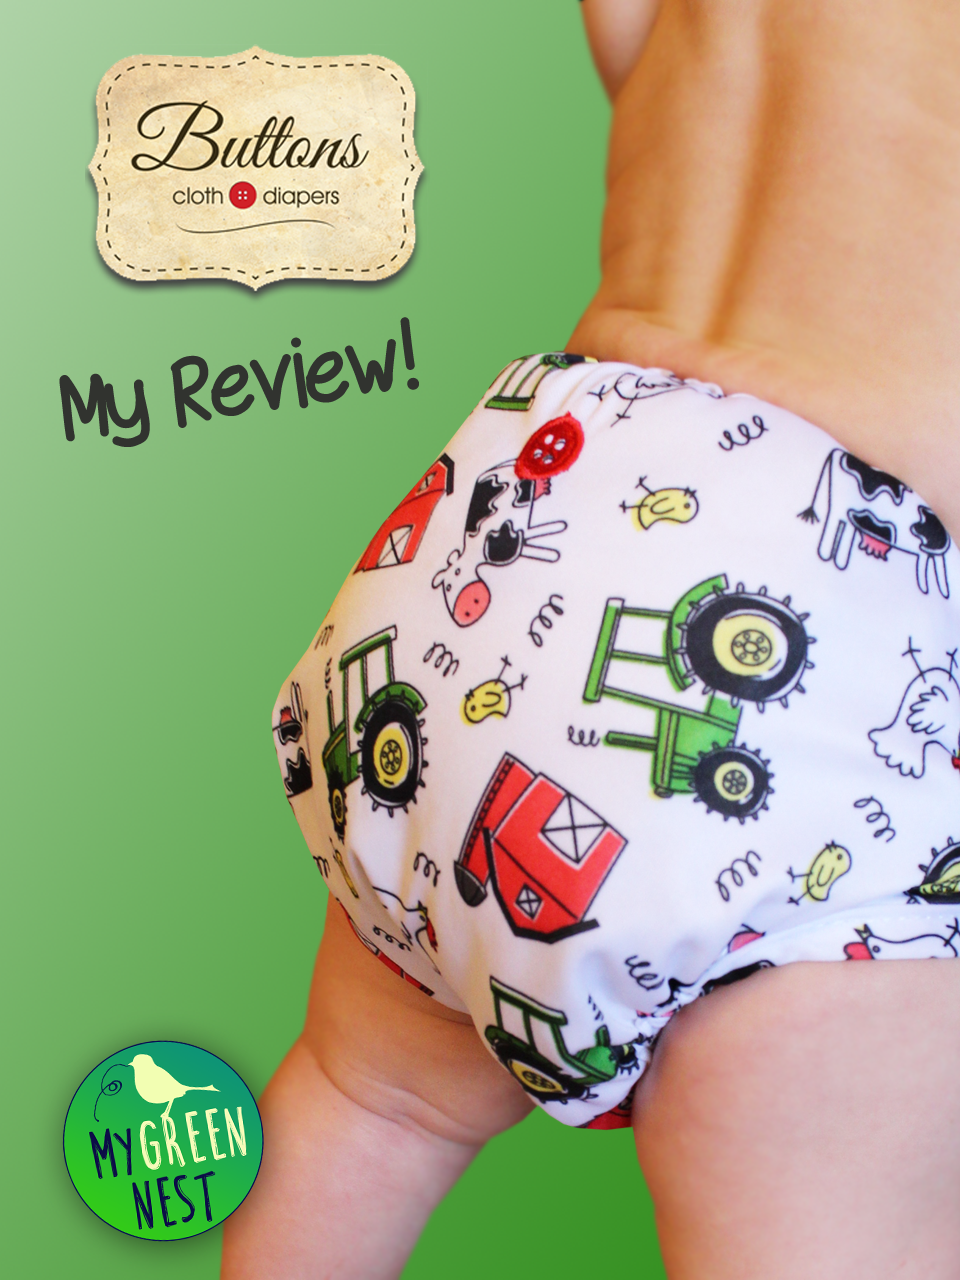 Buttons diapers - Der Testsieger unter allen Produkten